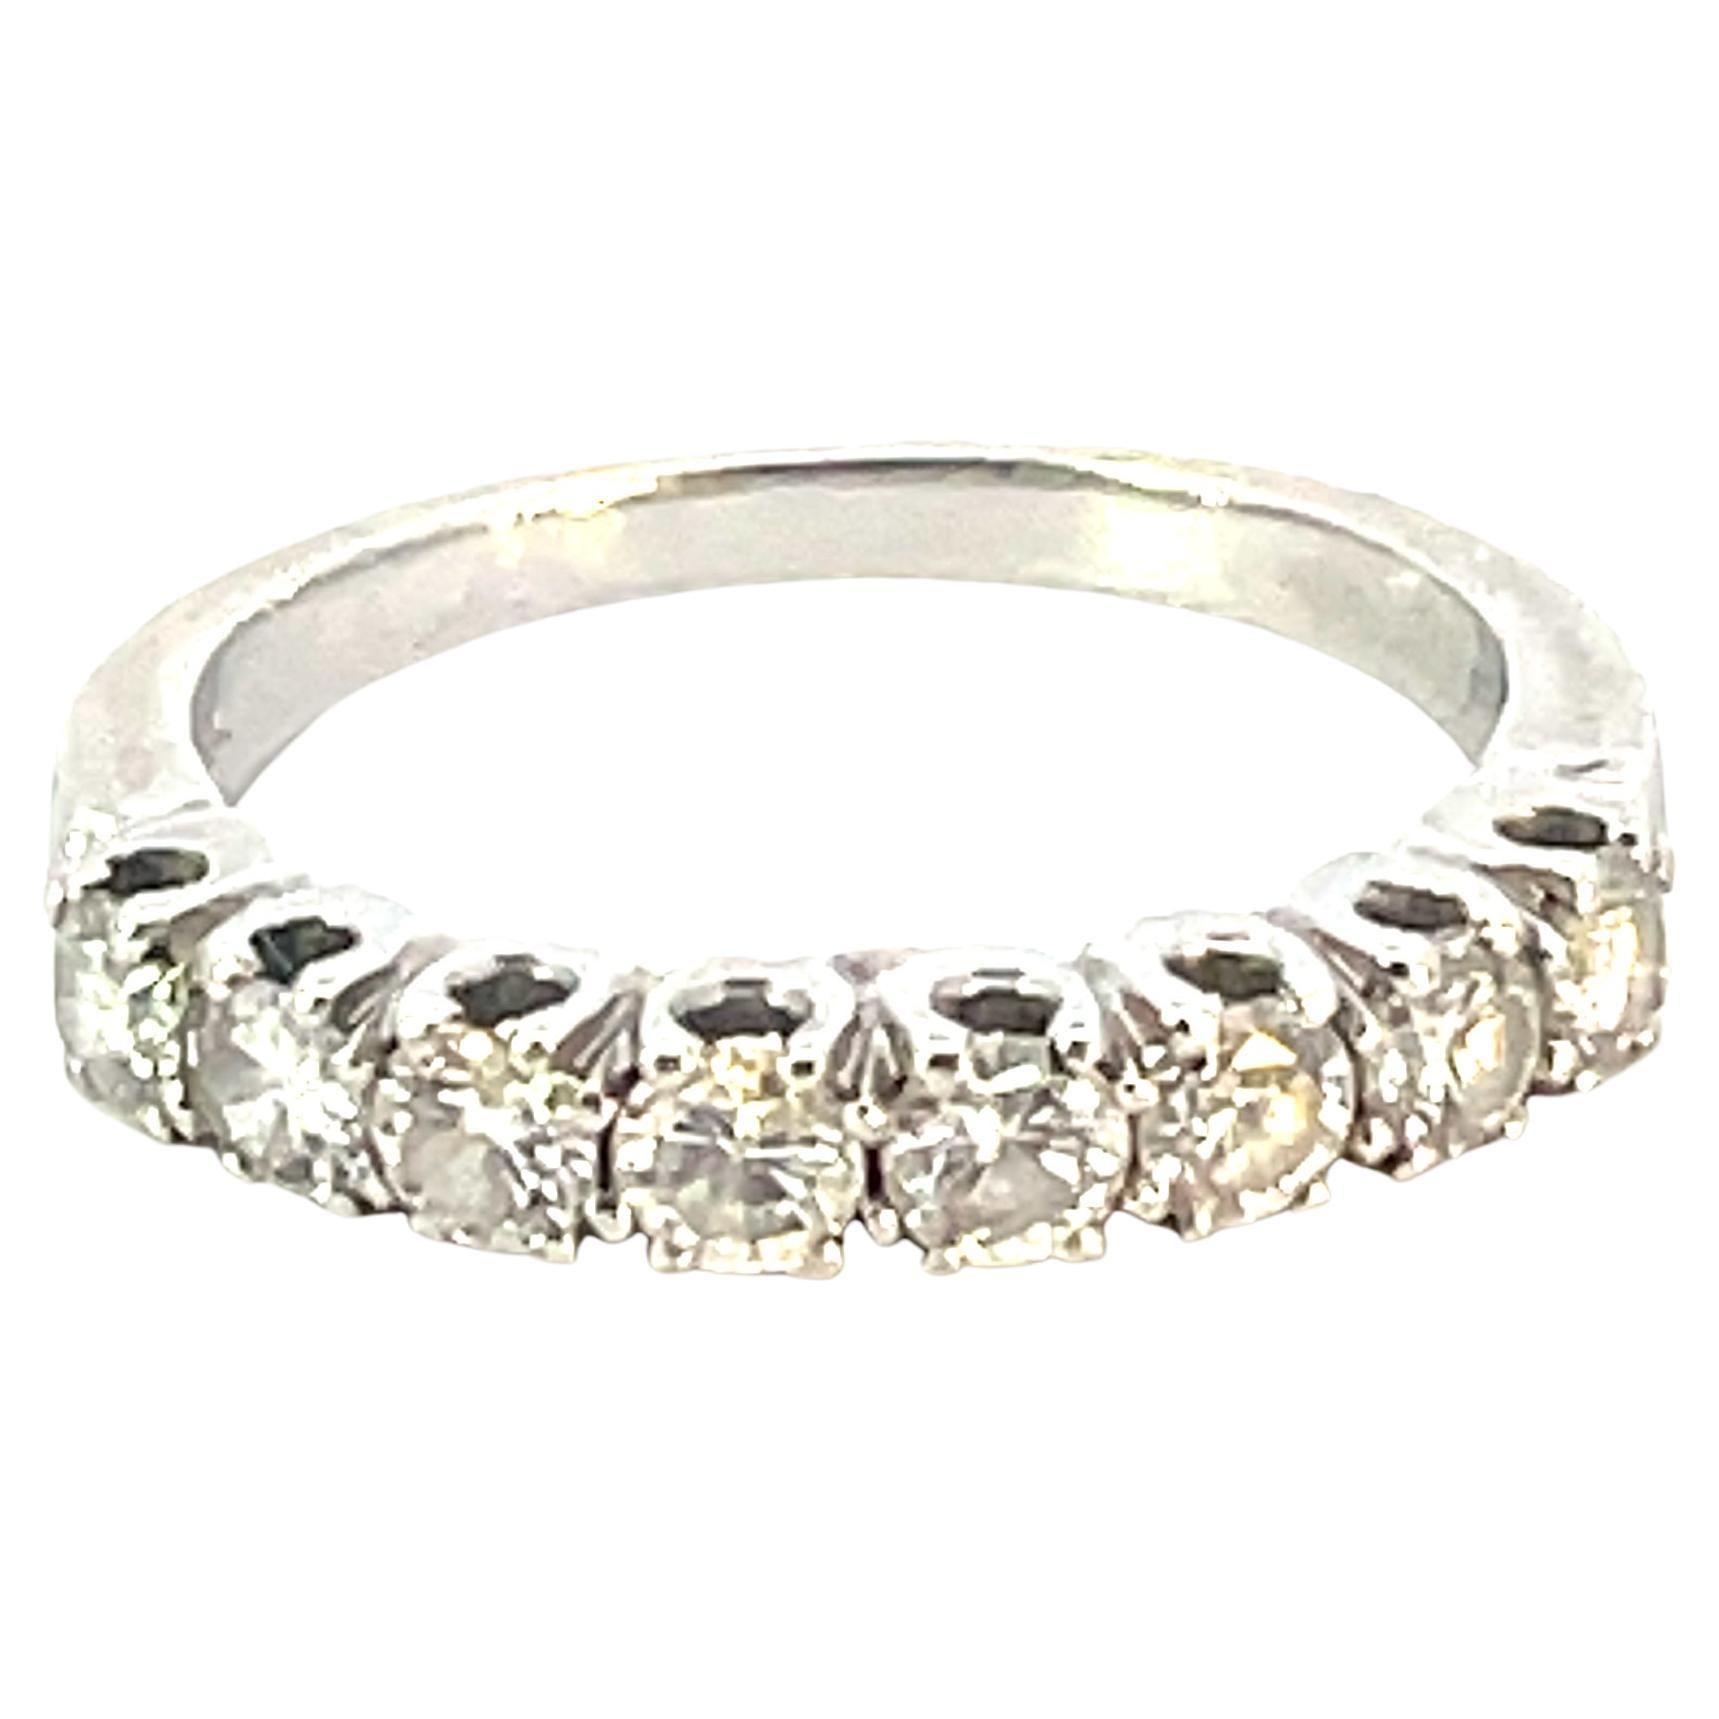 18 Karat White Gold Eight-Stone Diamond Half Eternity Ring 0.56 Carat F Color